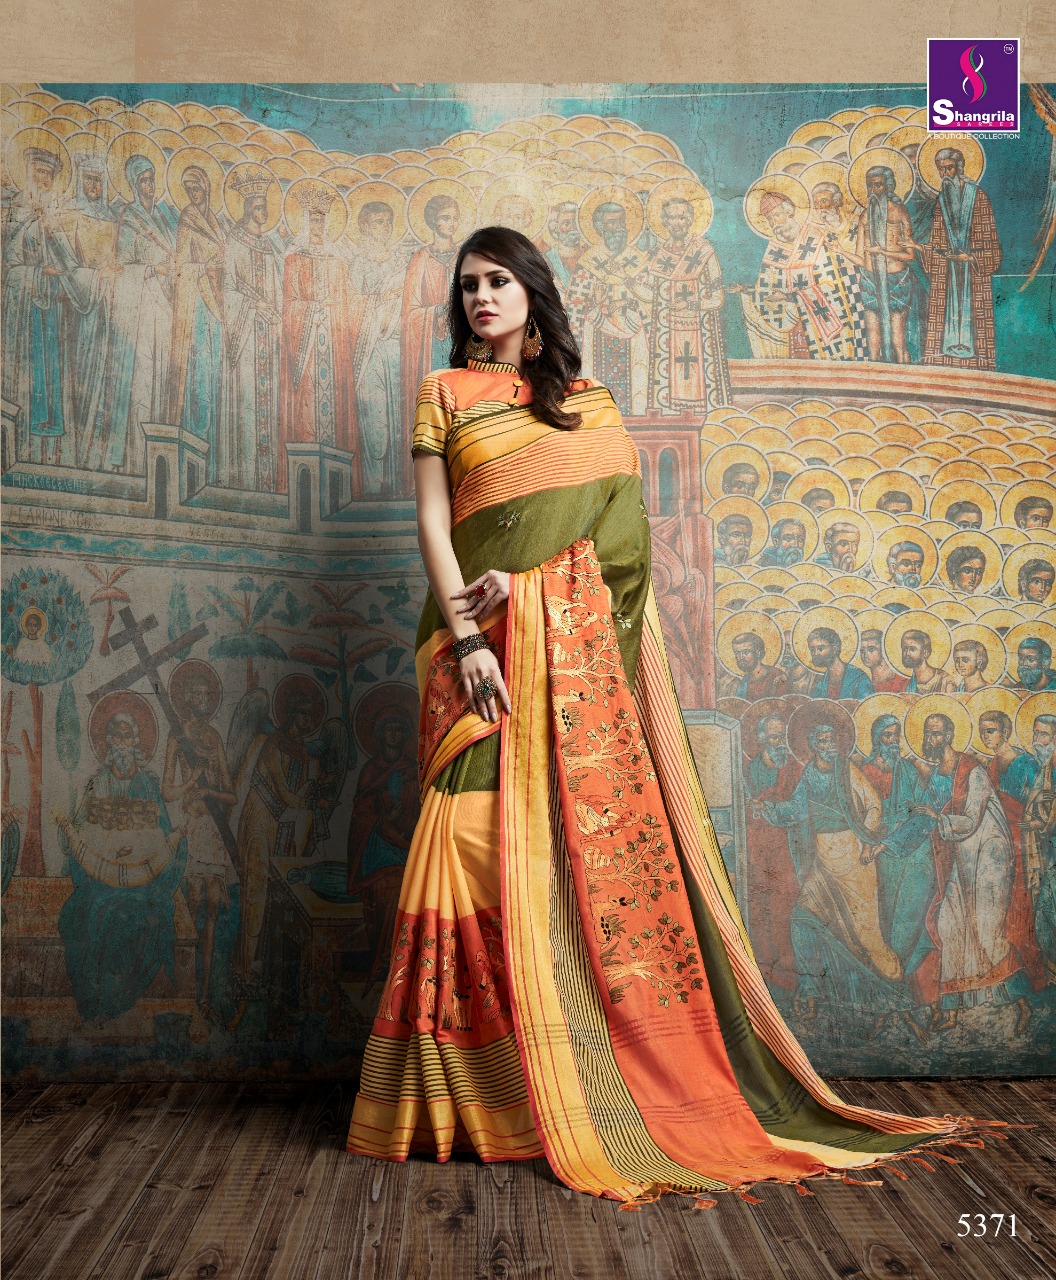 Shangrila tanvee silk indian wear Colourful saree collection